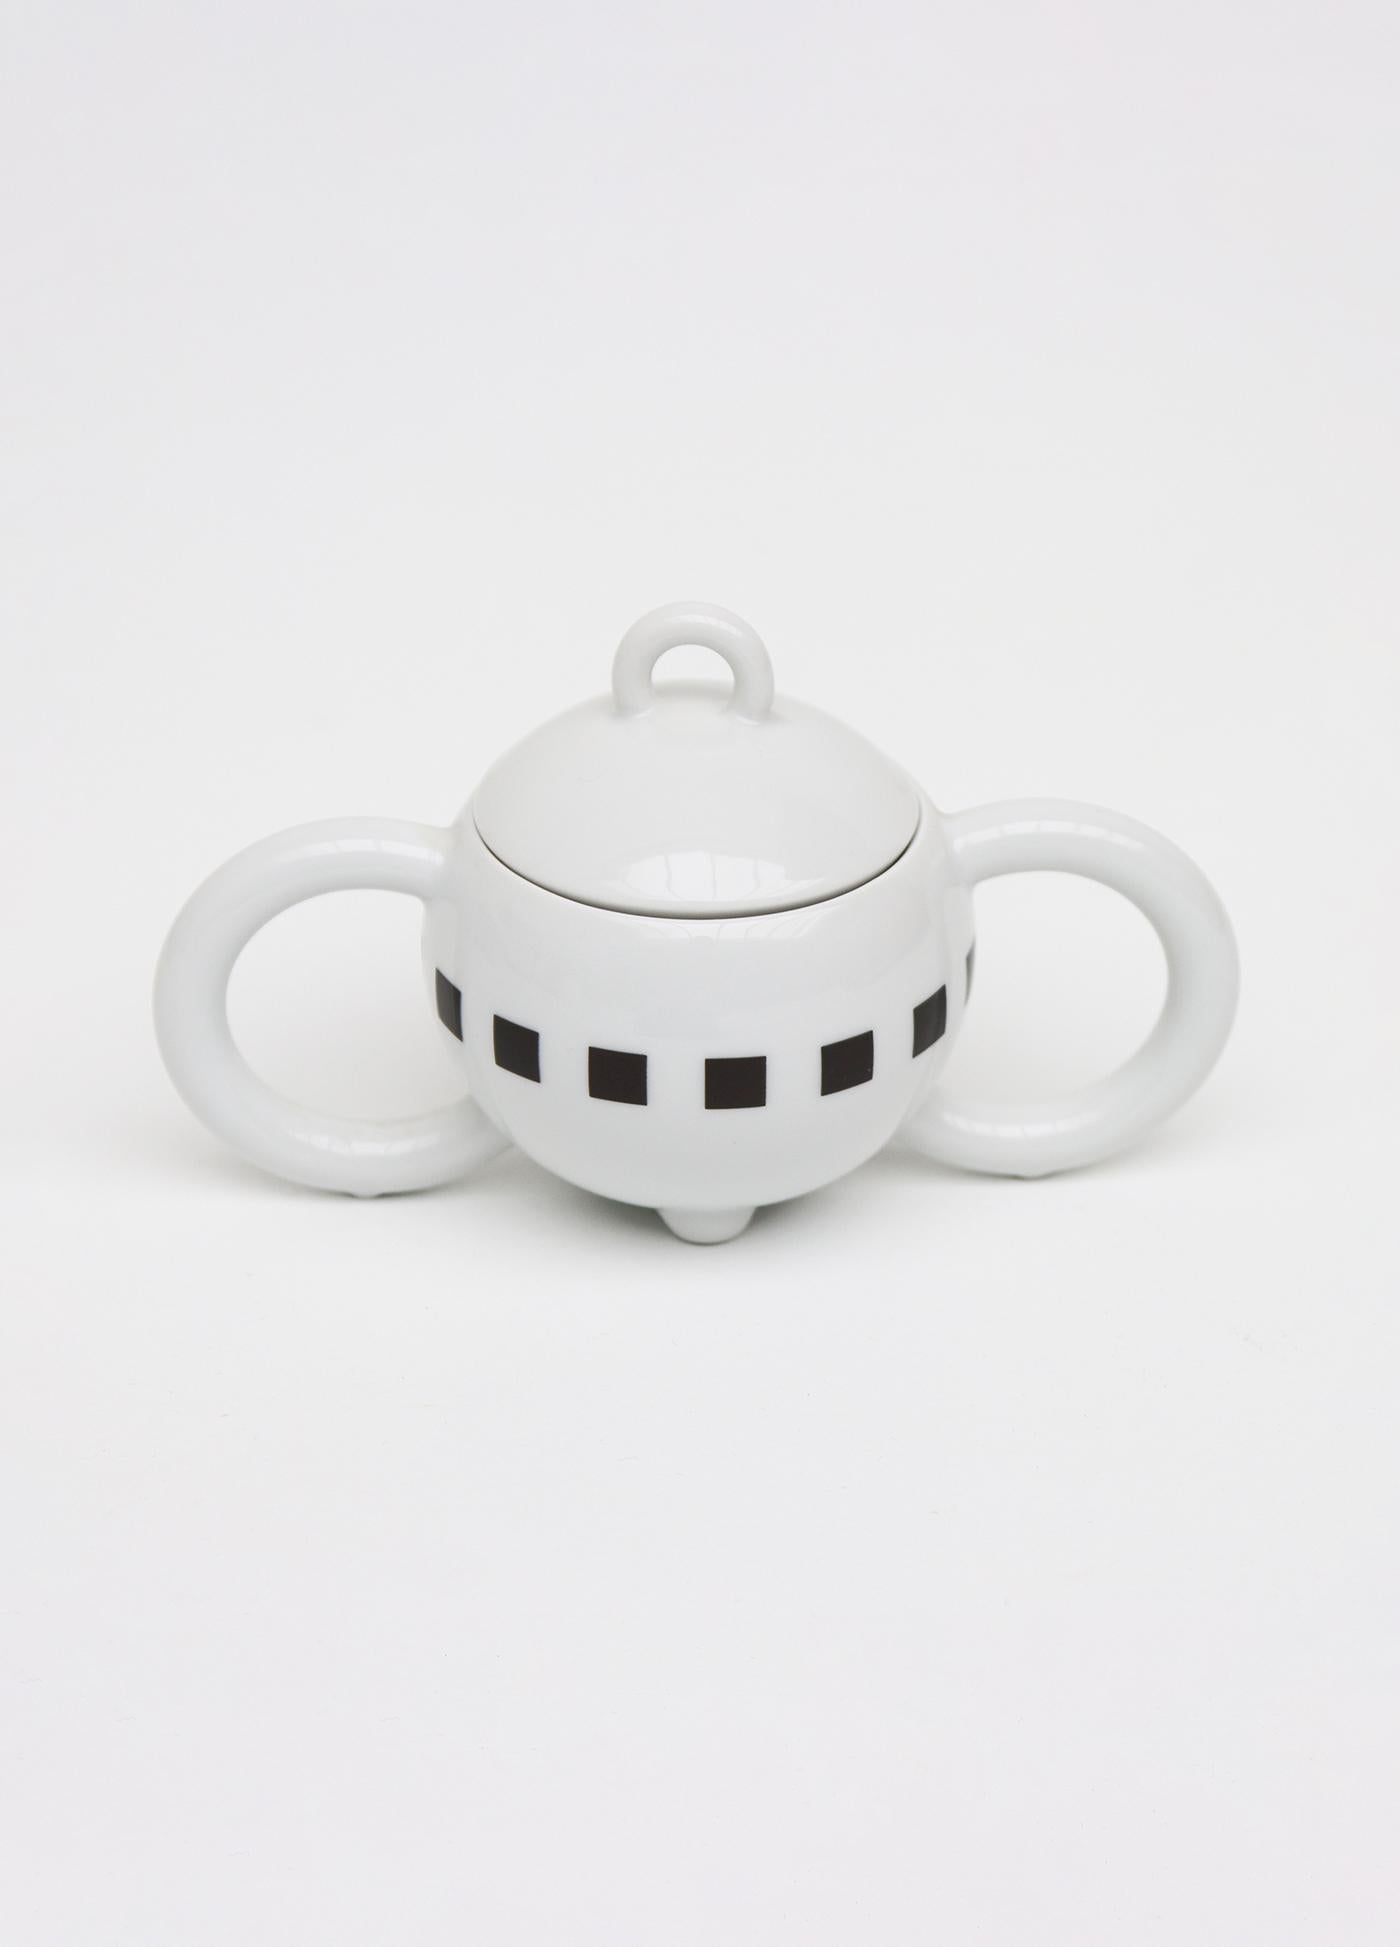 Matteo Thun Fantasia Porcelain Tea Set In Good Condition In Antwerpen, Antwerp